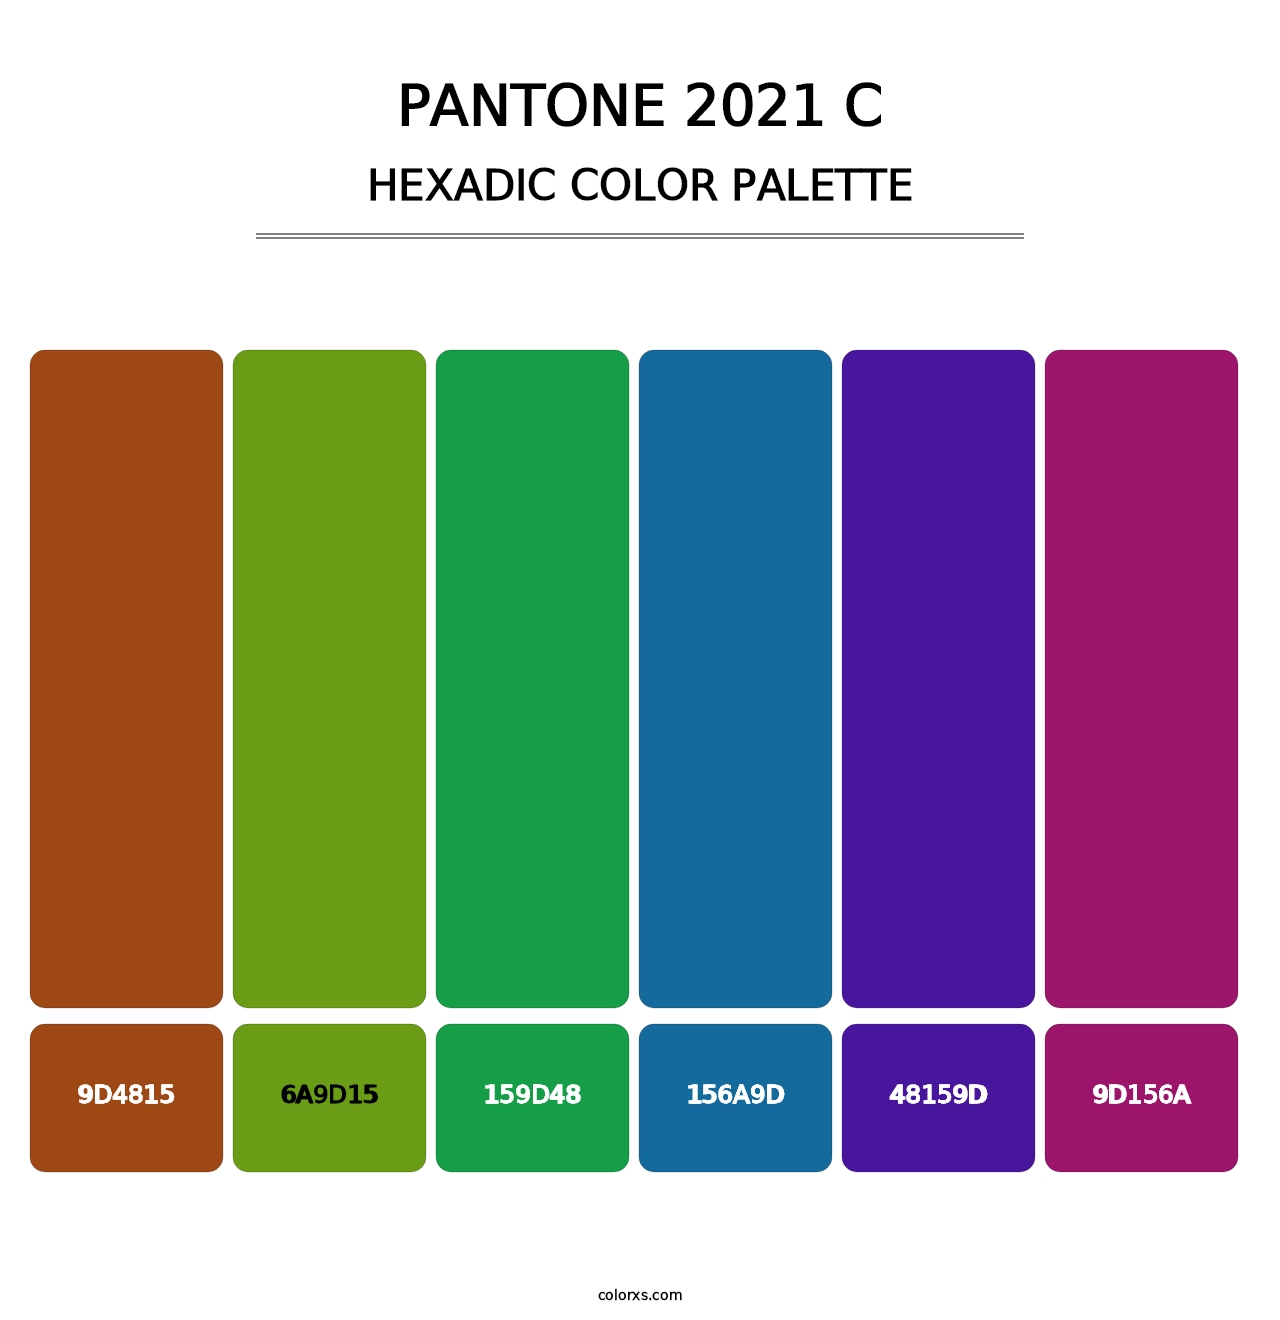 PANTONE 2021 C - Hexadic Color Palette